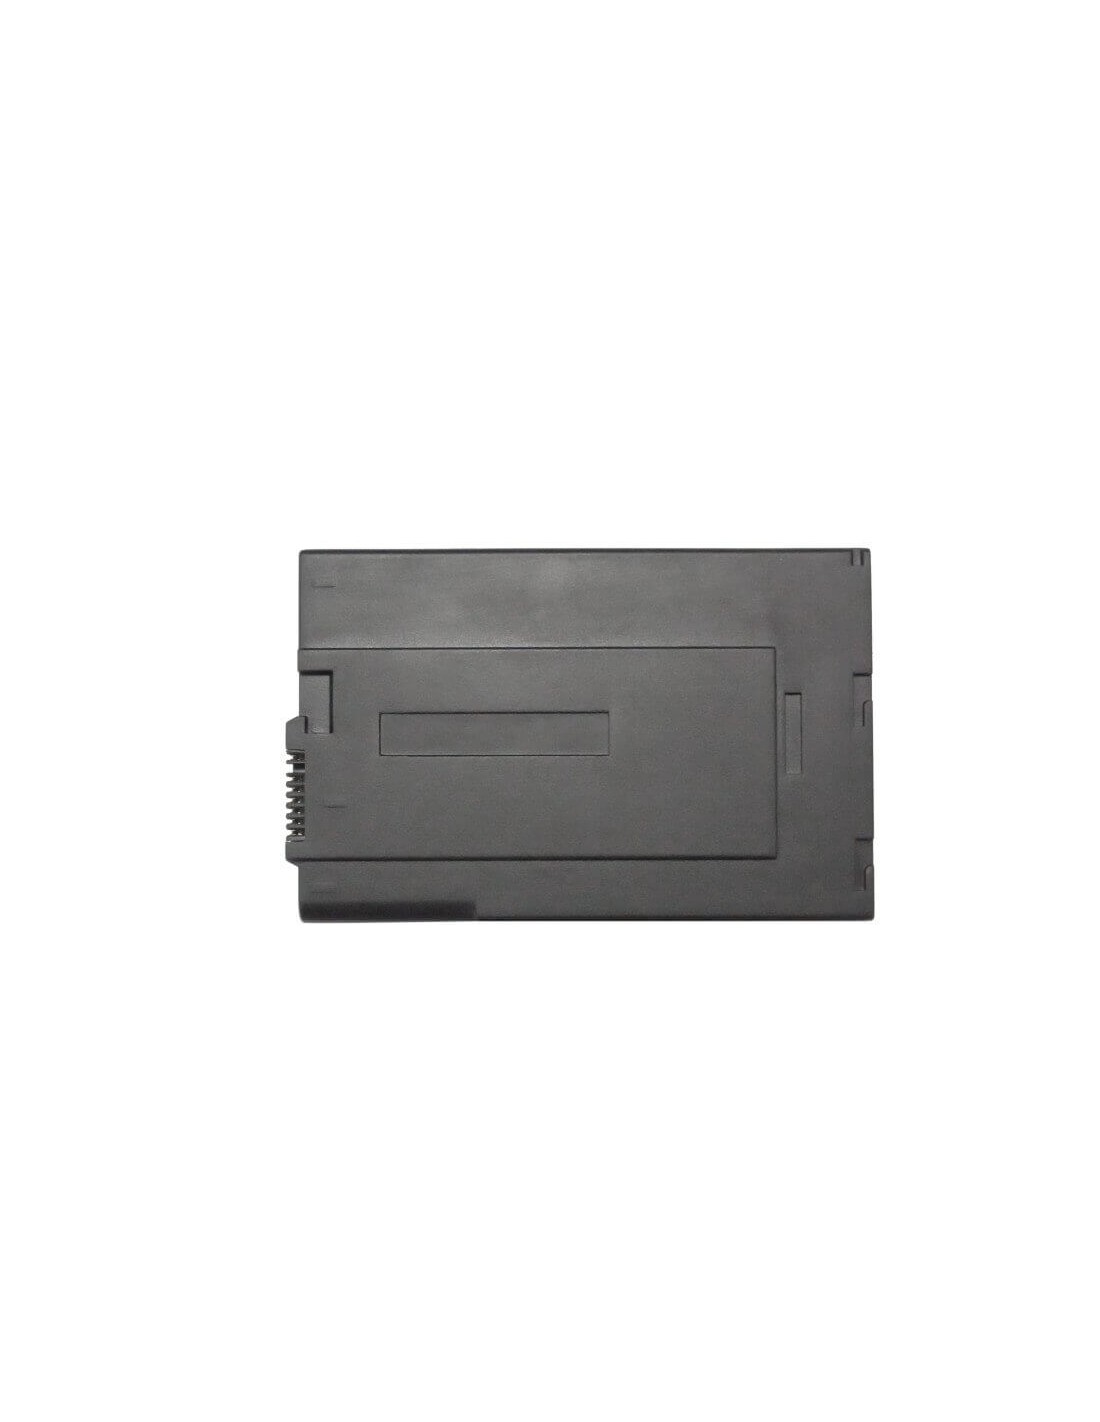 Dark grey Battery for Acer Travelmate 520, Travelmate 520it, Travelmate 521 14.8V, 4400mAh - 65.12Wh